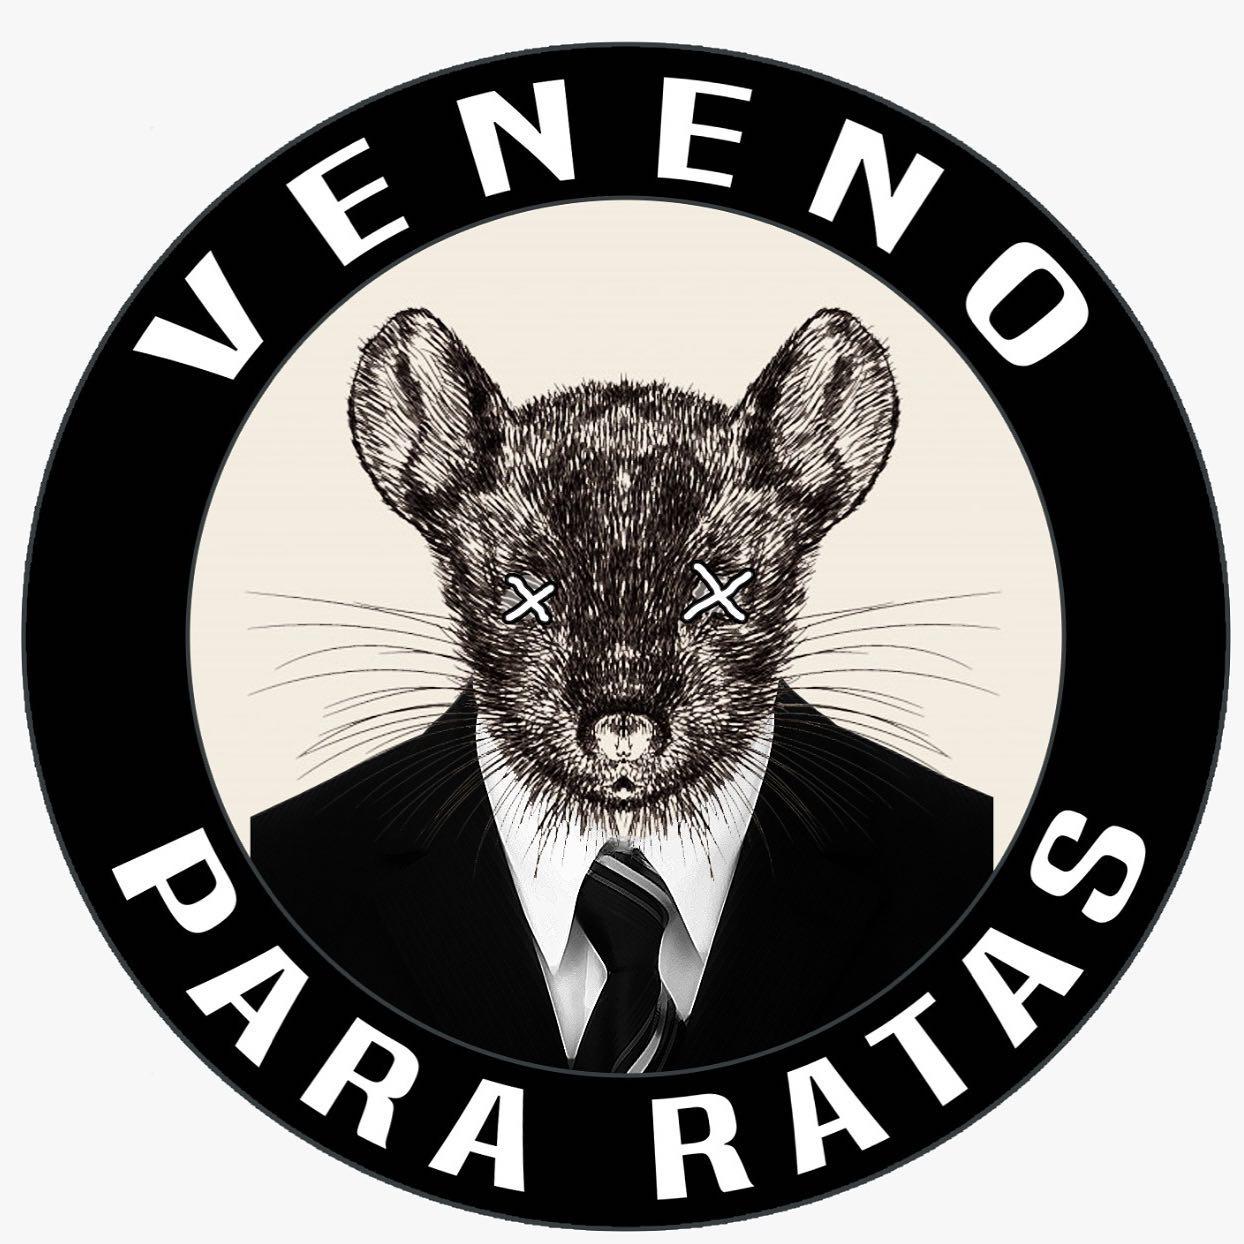 https://viberatecdn.blob.core.windows.net/entity/artist/veneno-para-ratas-QYgYS